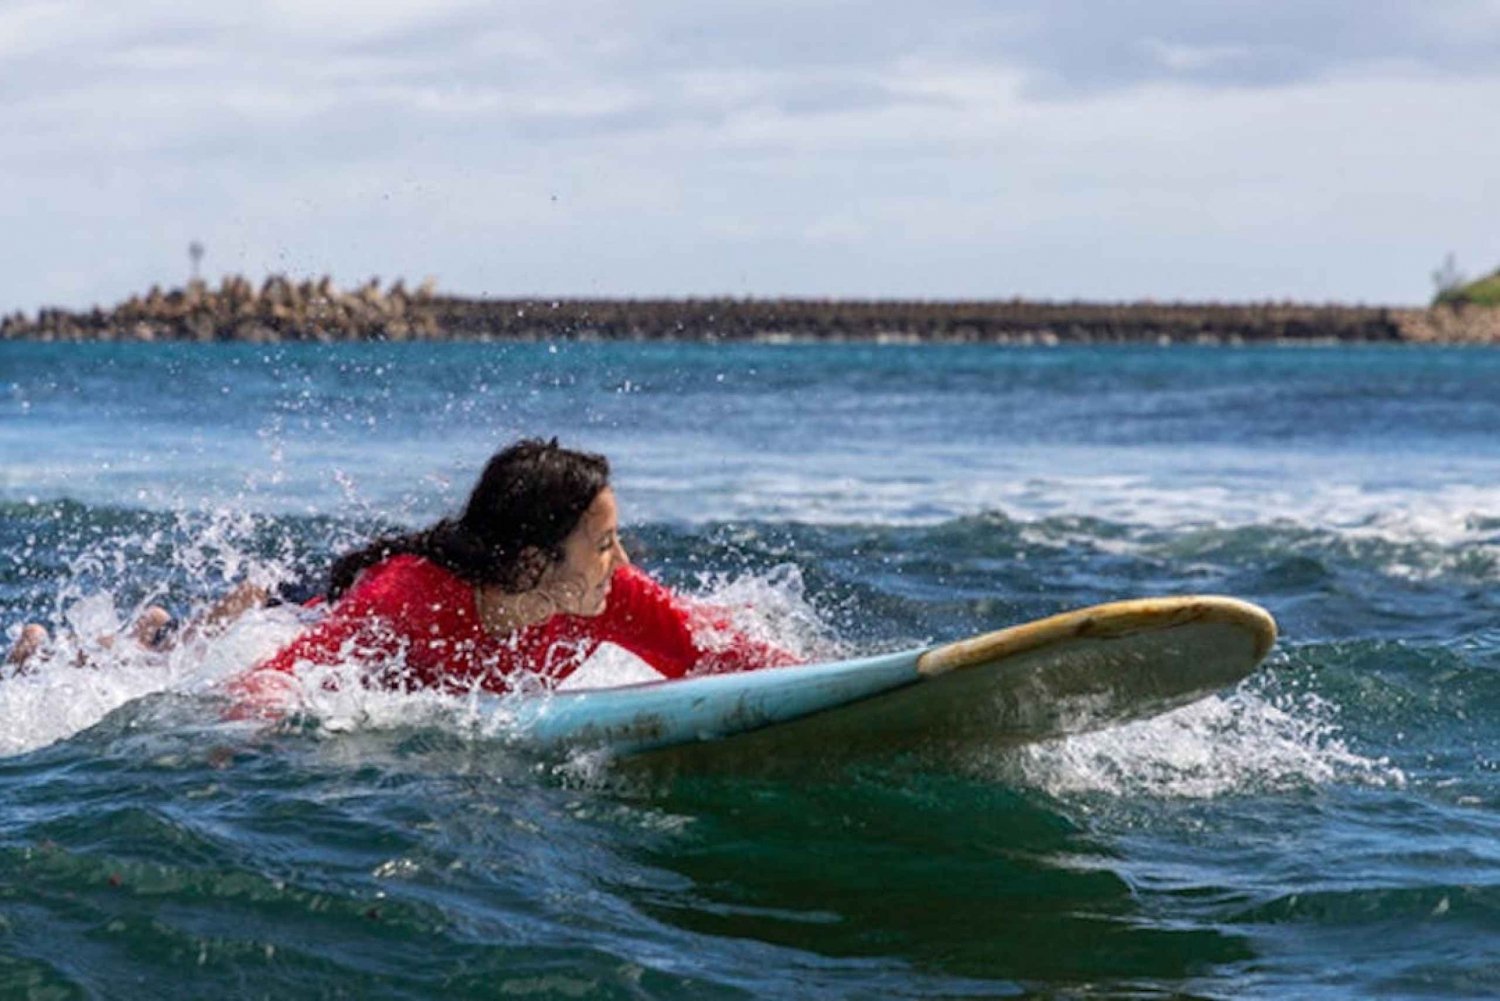 Kauai: Surfen am Kalapaki Beach